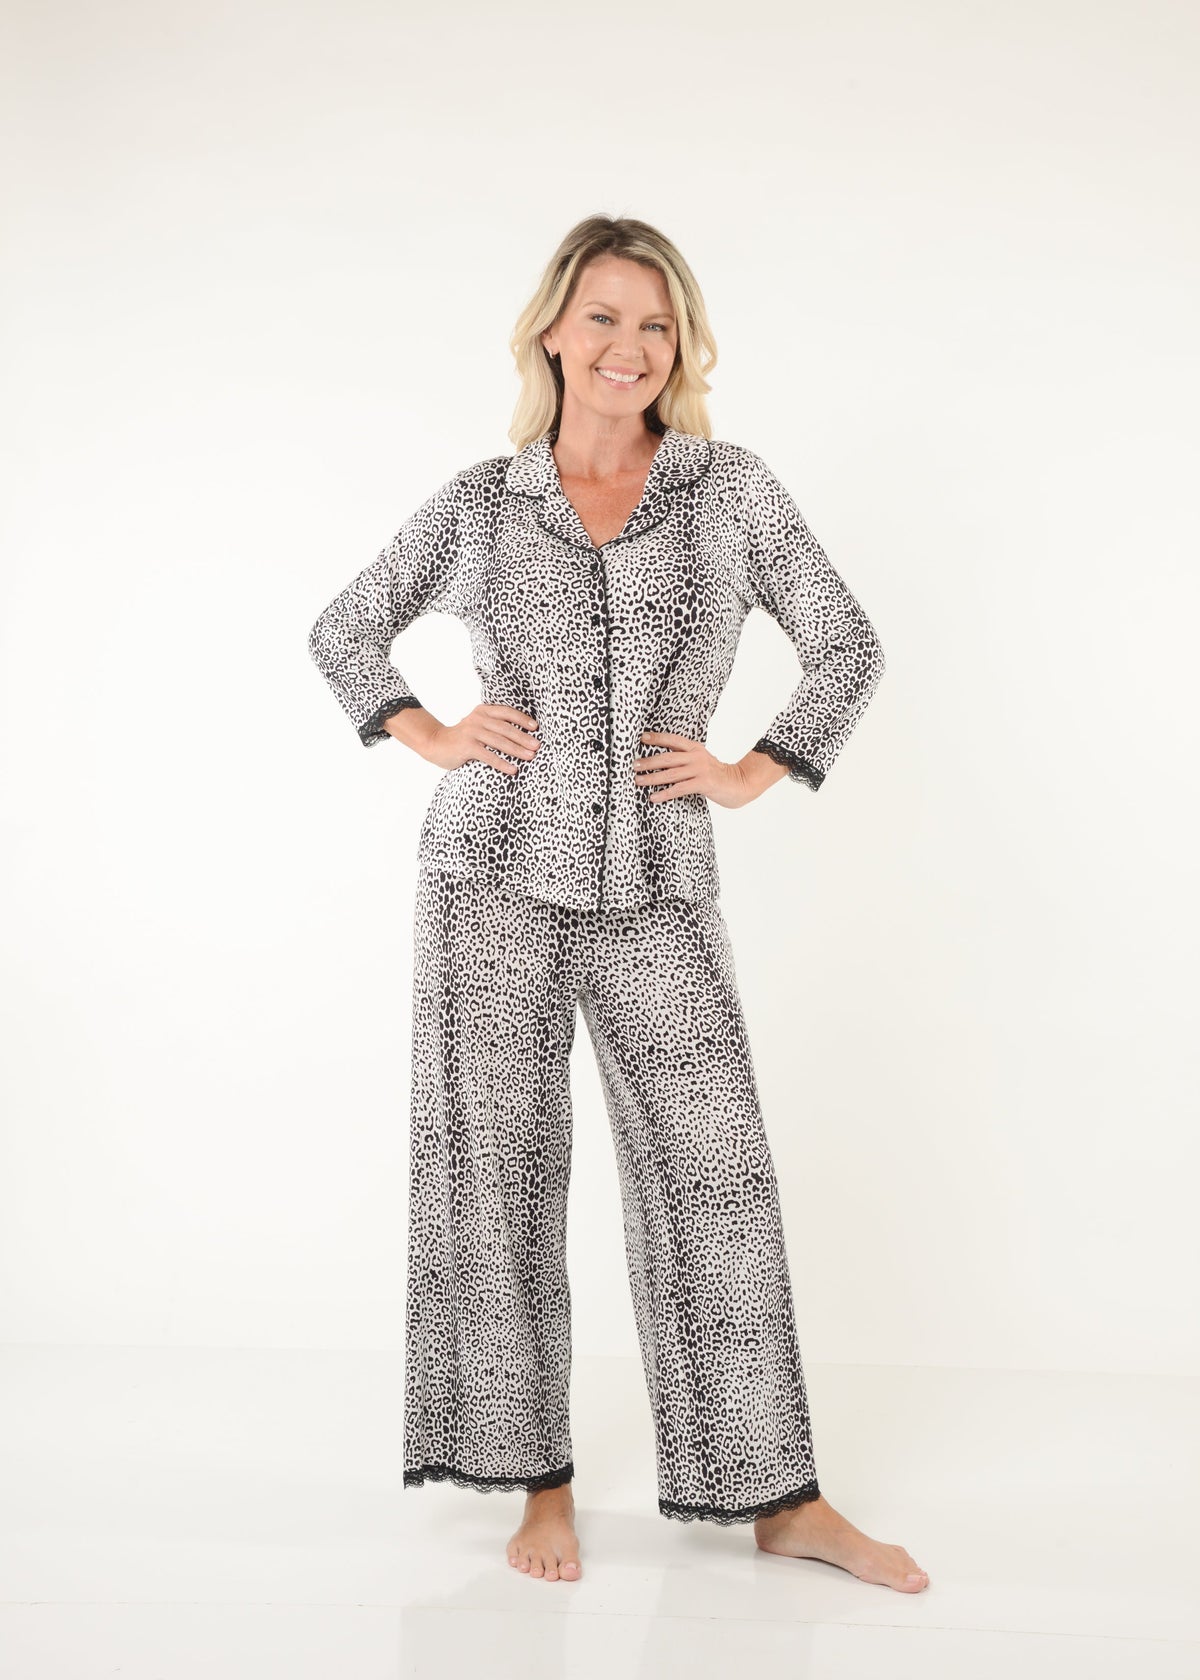 AherBiu Womens Pajamas Sets Star Graphic Tops with Comfy Lounge Pants  Sleepwear 2 Piece Outfits